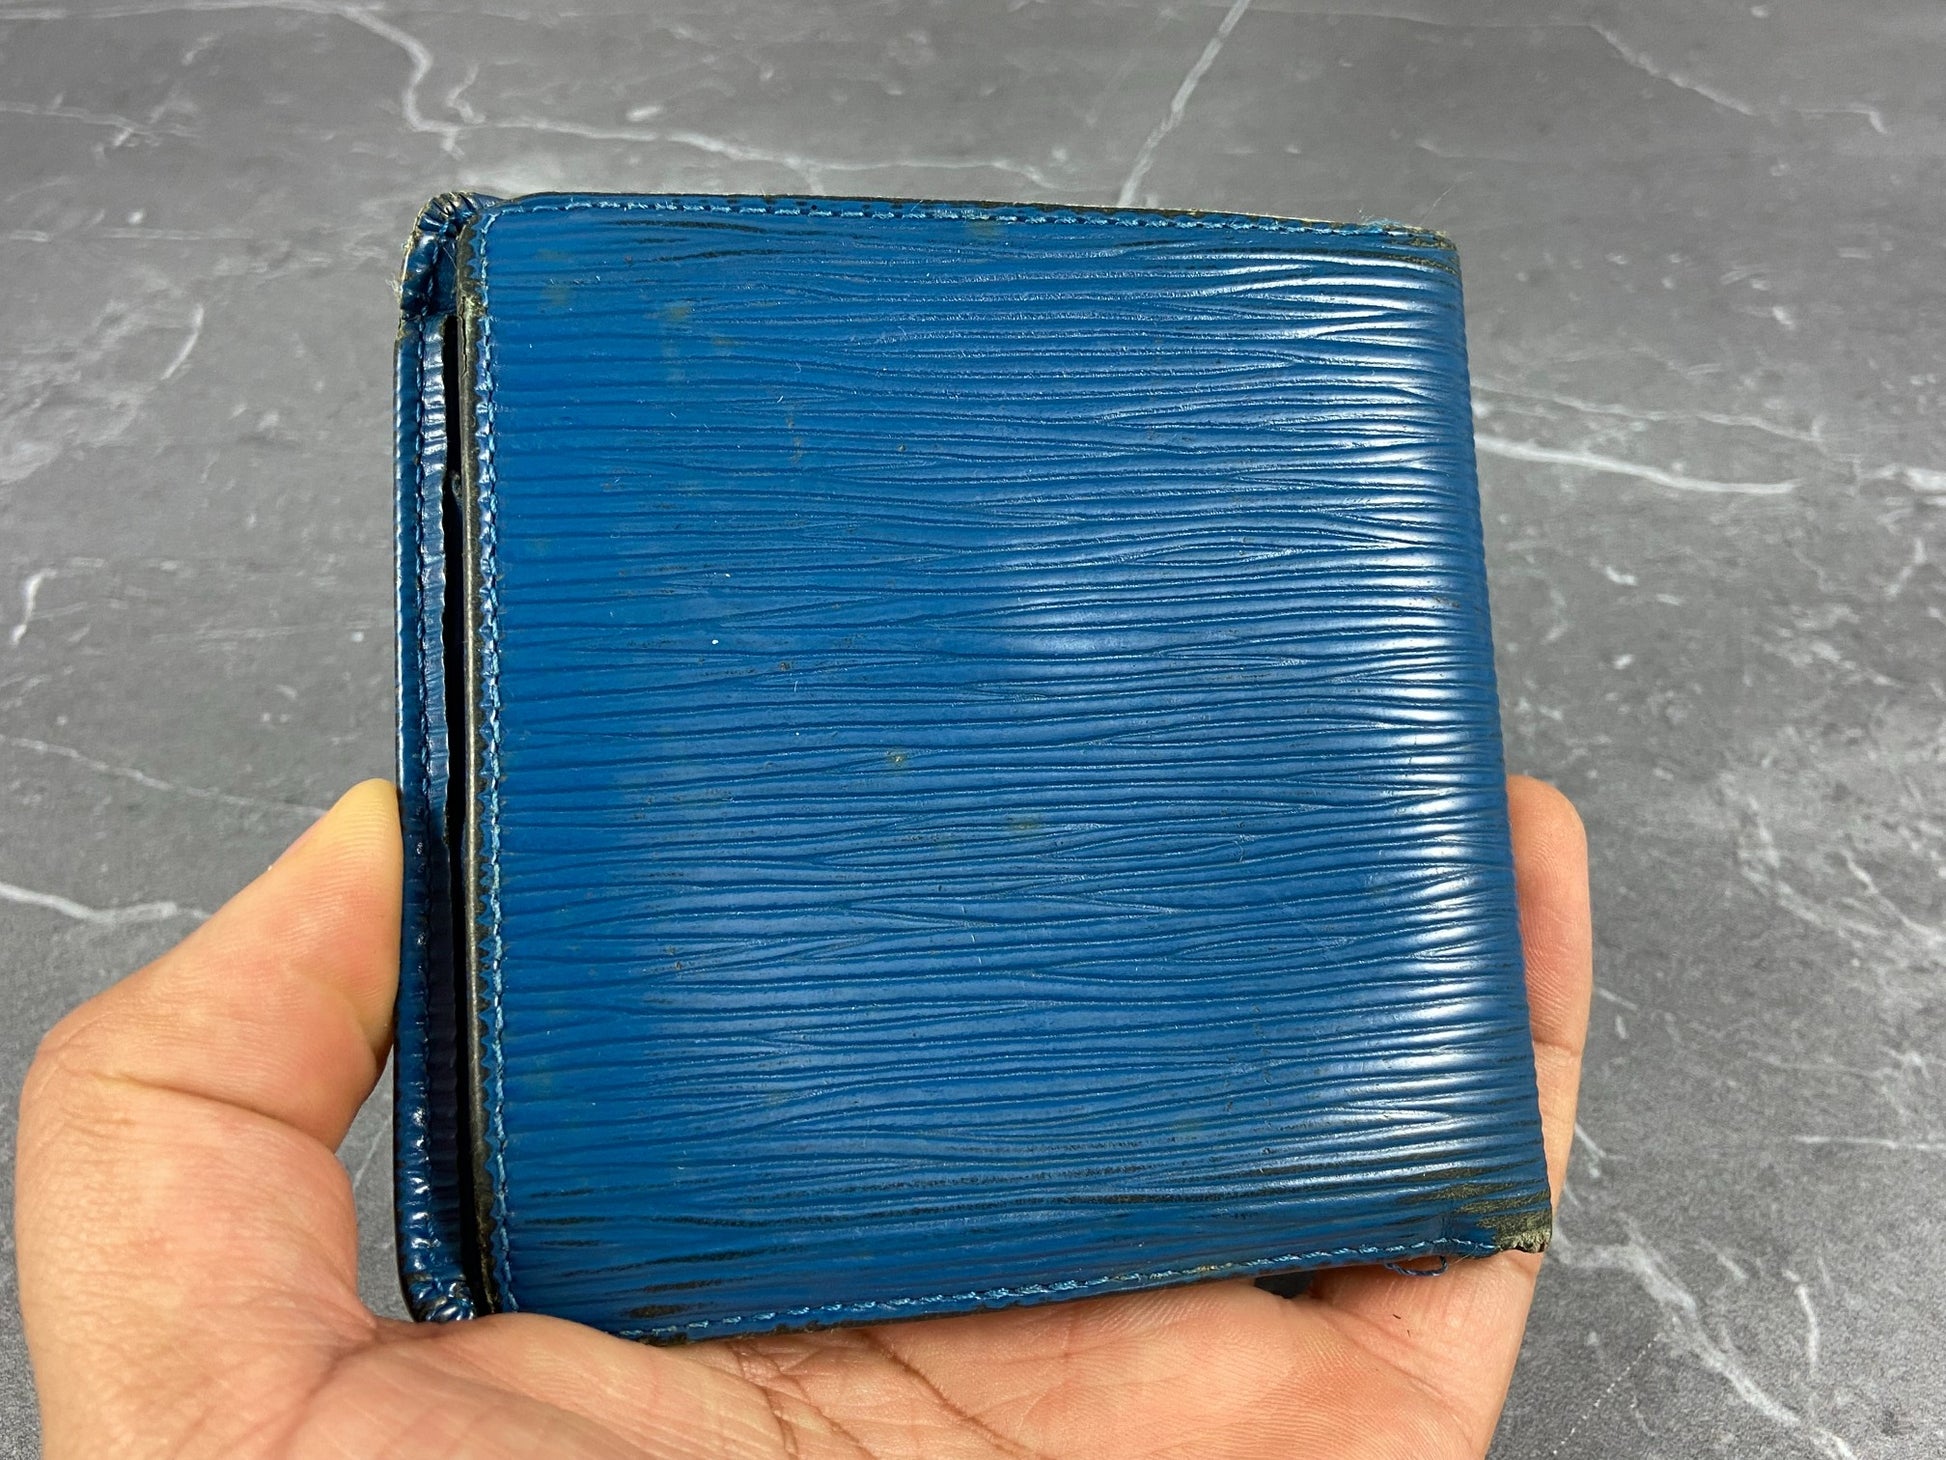 Louis Vuitton EPI Leather Marco Wallet LV-0213N-0028